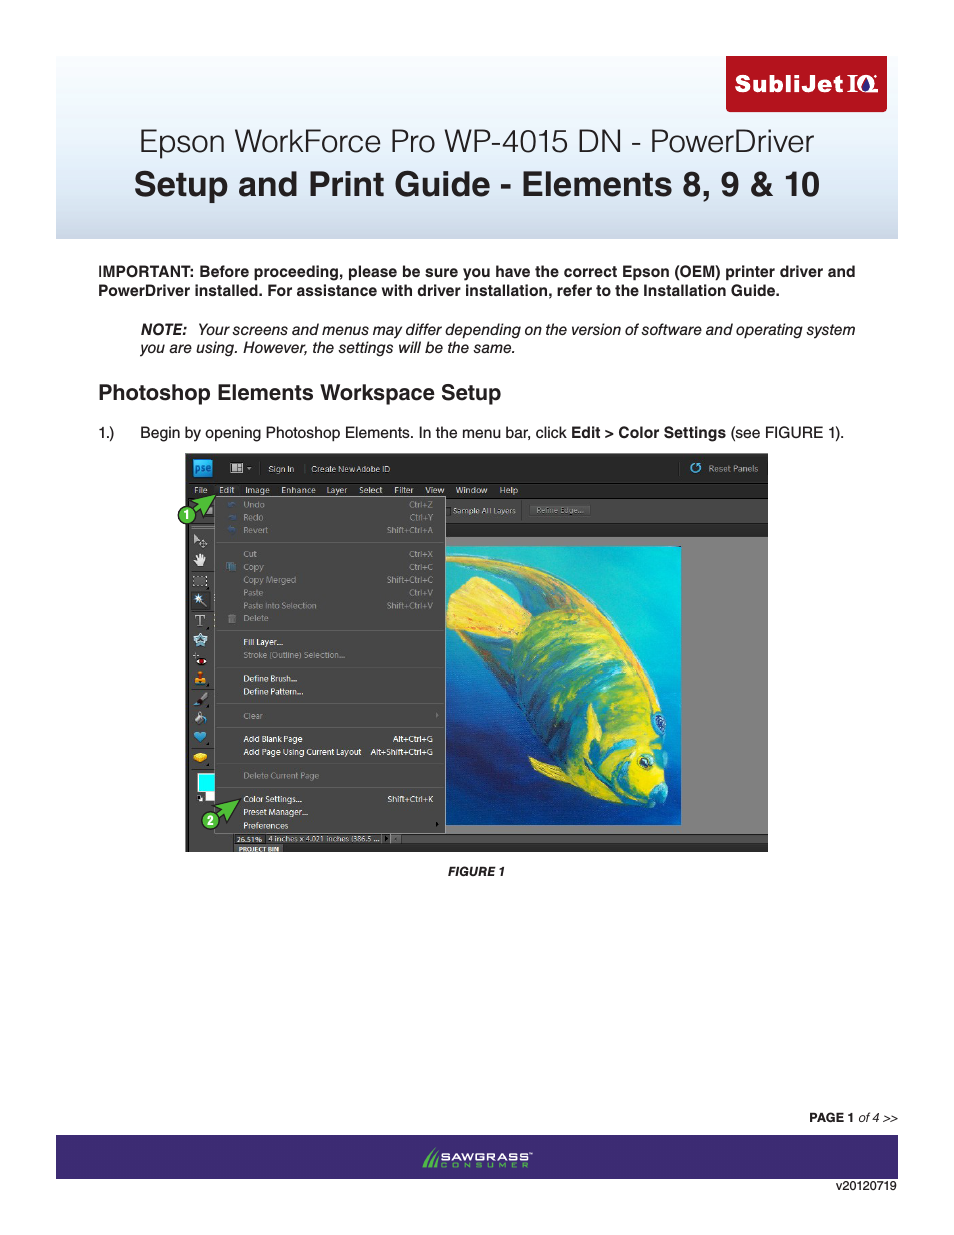 SubliJet IQ Epson WP-4015 (Power Driver Setup): Print & Setup Guide Adobe Photoshop Elements 8 - 10